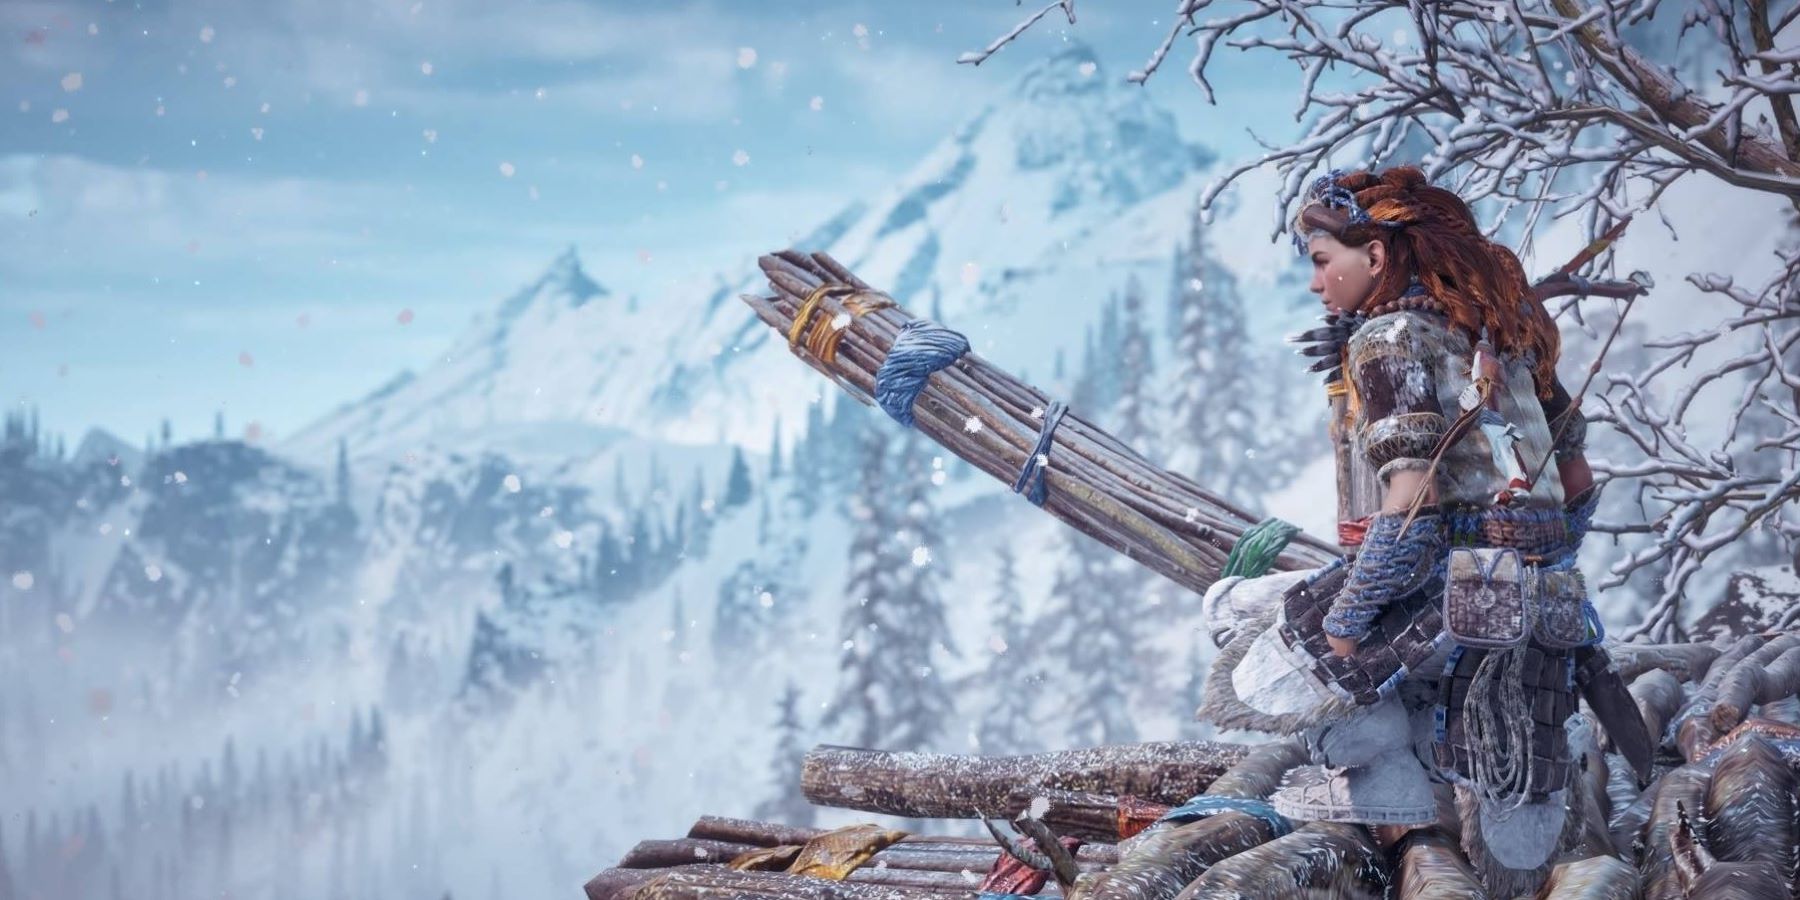 Aloy wearing Banuk armor and crouching in the Frozen Wilds in Horizon Zero Dawn